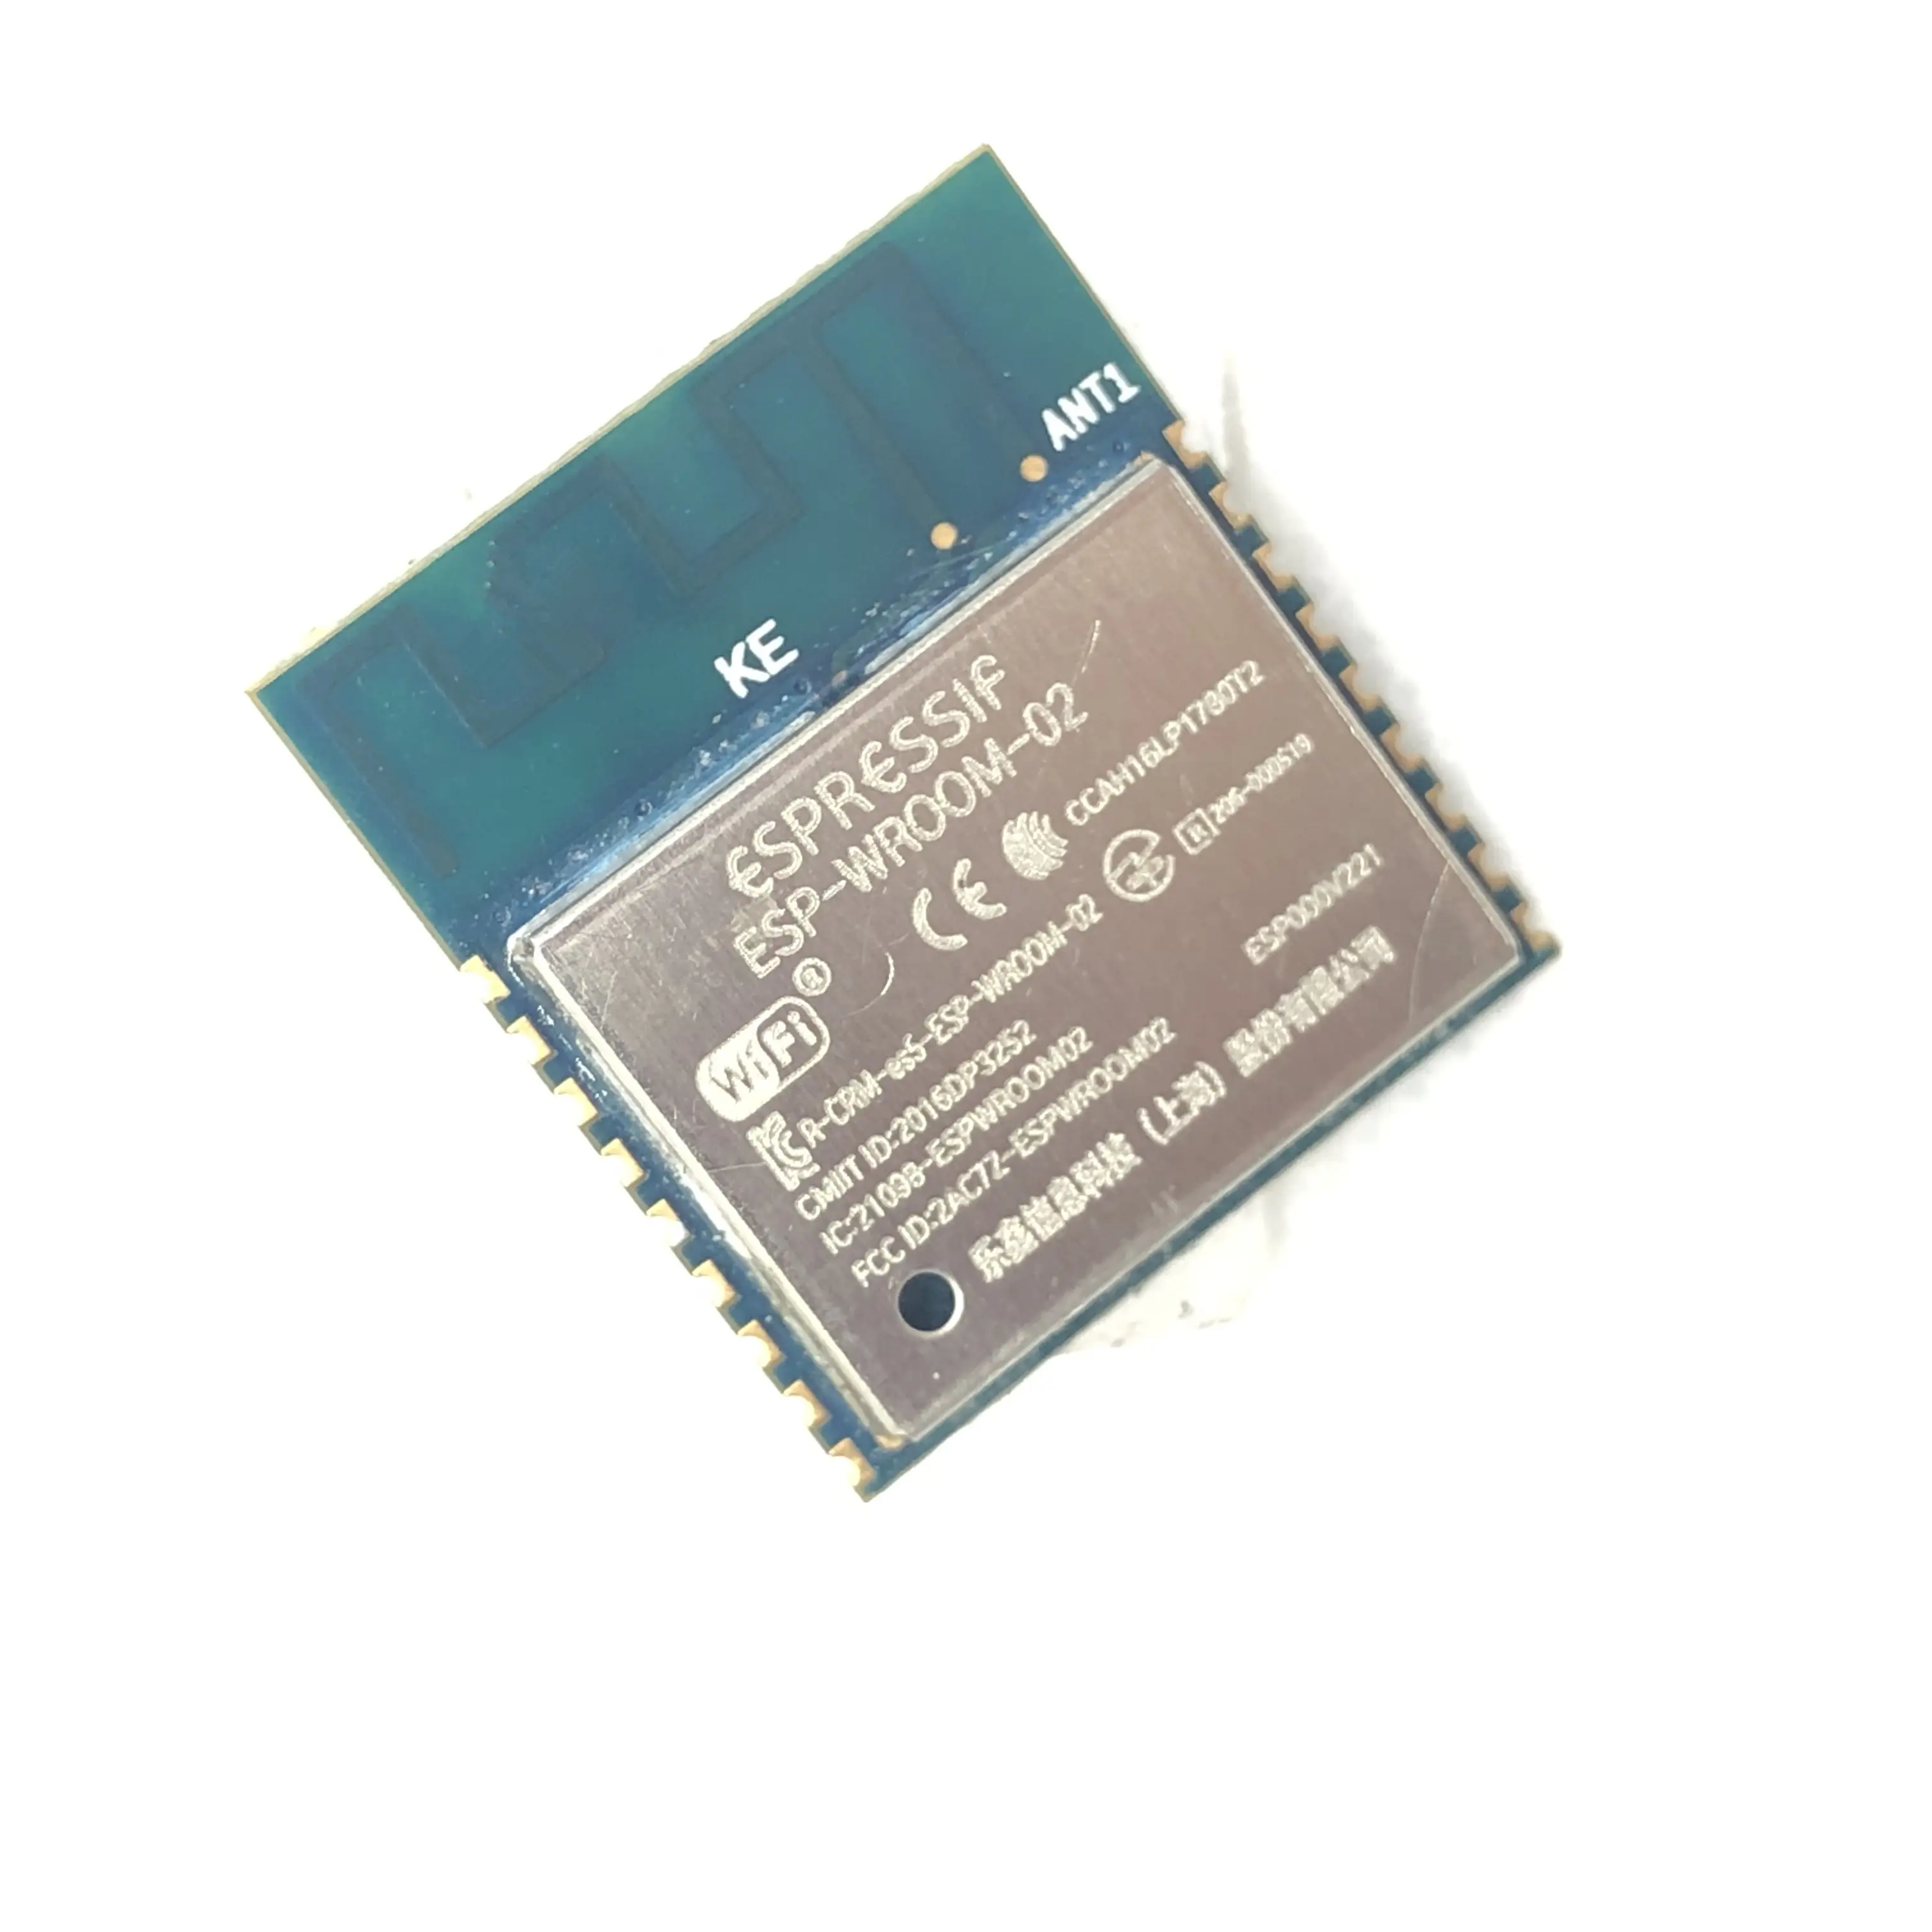 Espressif ESP-WROOM-02 4 MB WLAN-Modul ased auf esp8266 WLAN-Modul seriell mit FCC CE RoHS für Smart Board IoT-Gerät